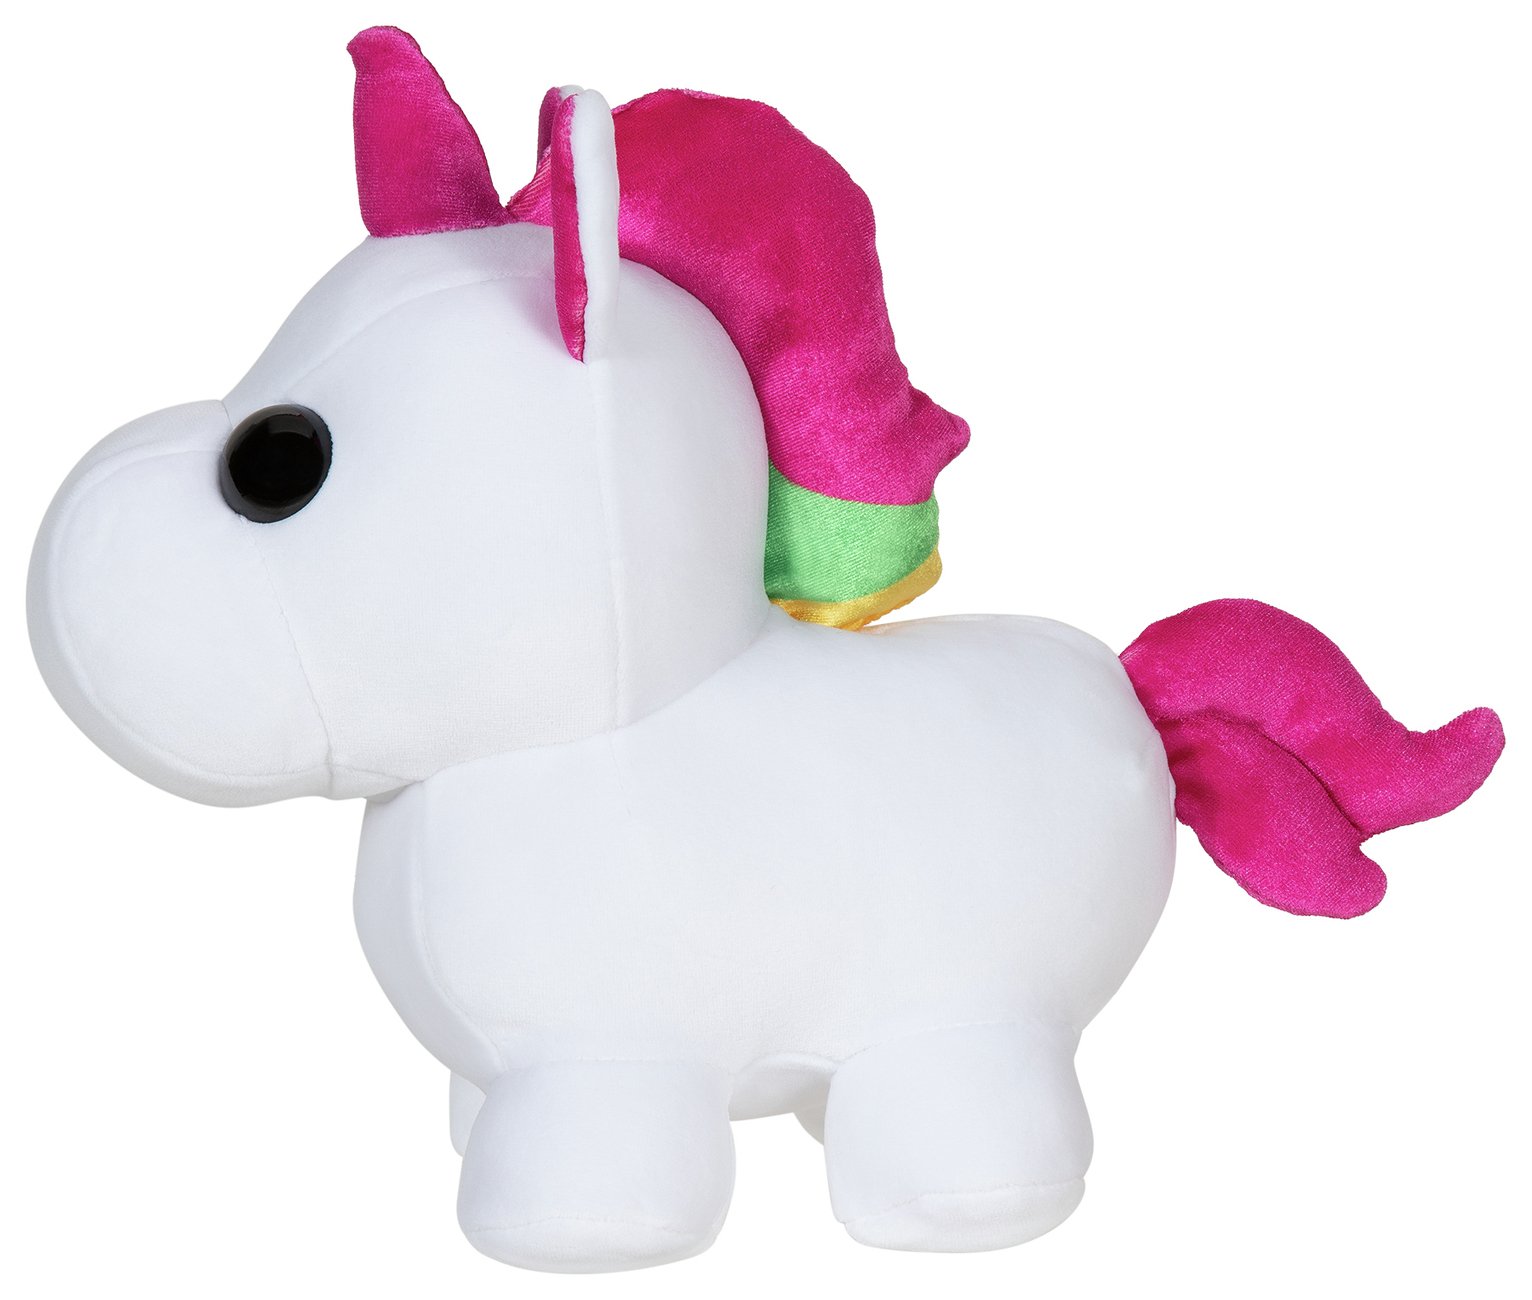 Adopt Me! Collector Plush - Unicorn